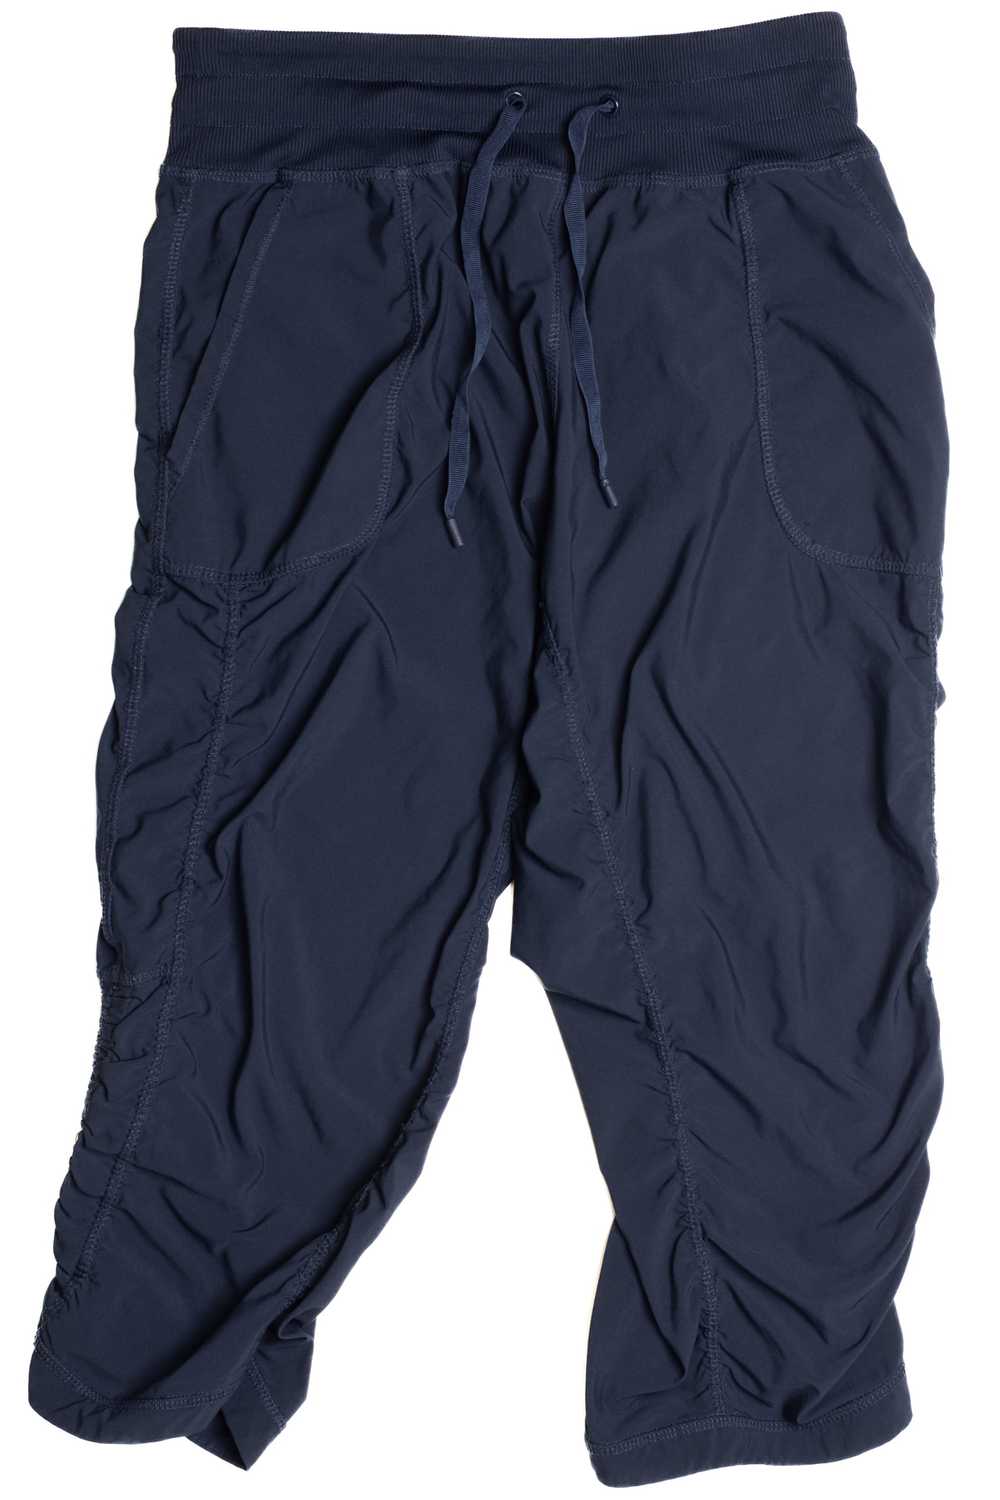 Dark Blue Capri Track Pants 934 - image 1